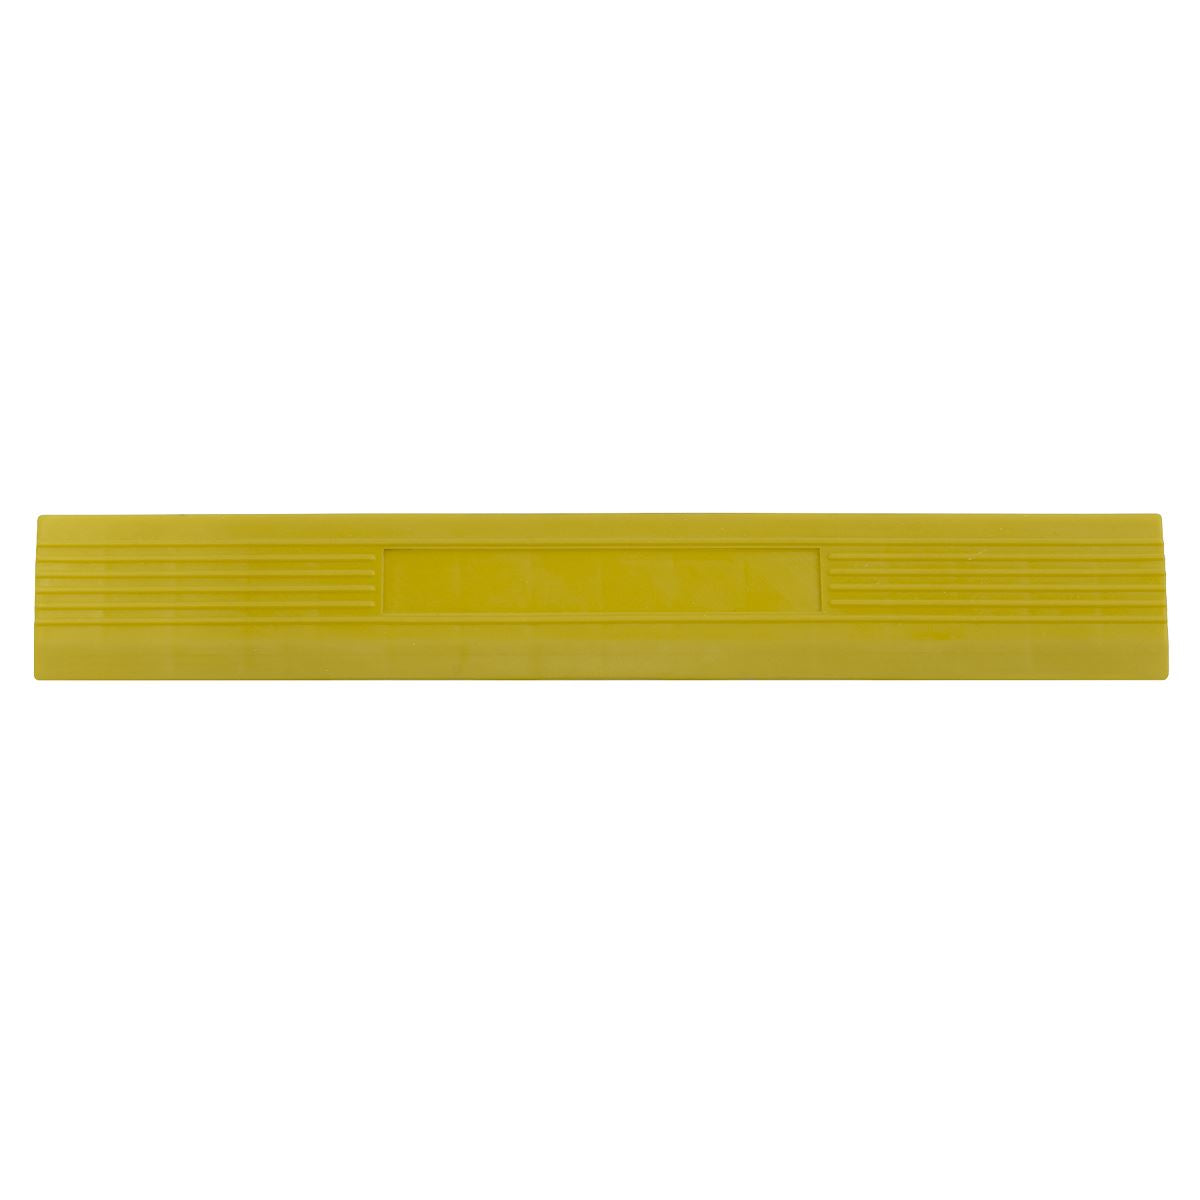 Sealey Polypropylene Floor Tile Edge 400 x 60mm Yellow Male - Pack of 6